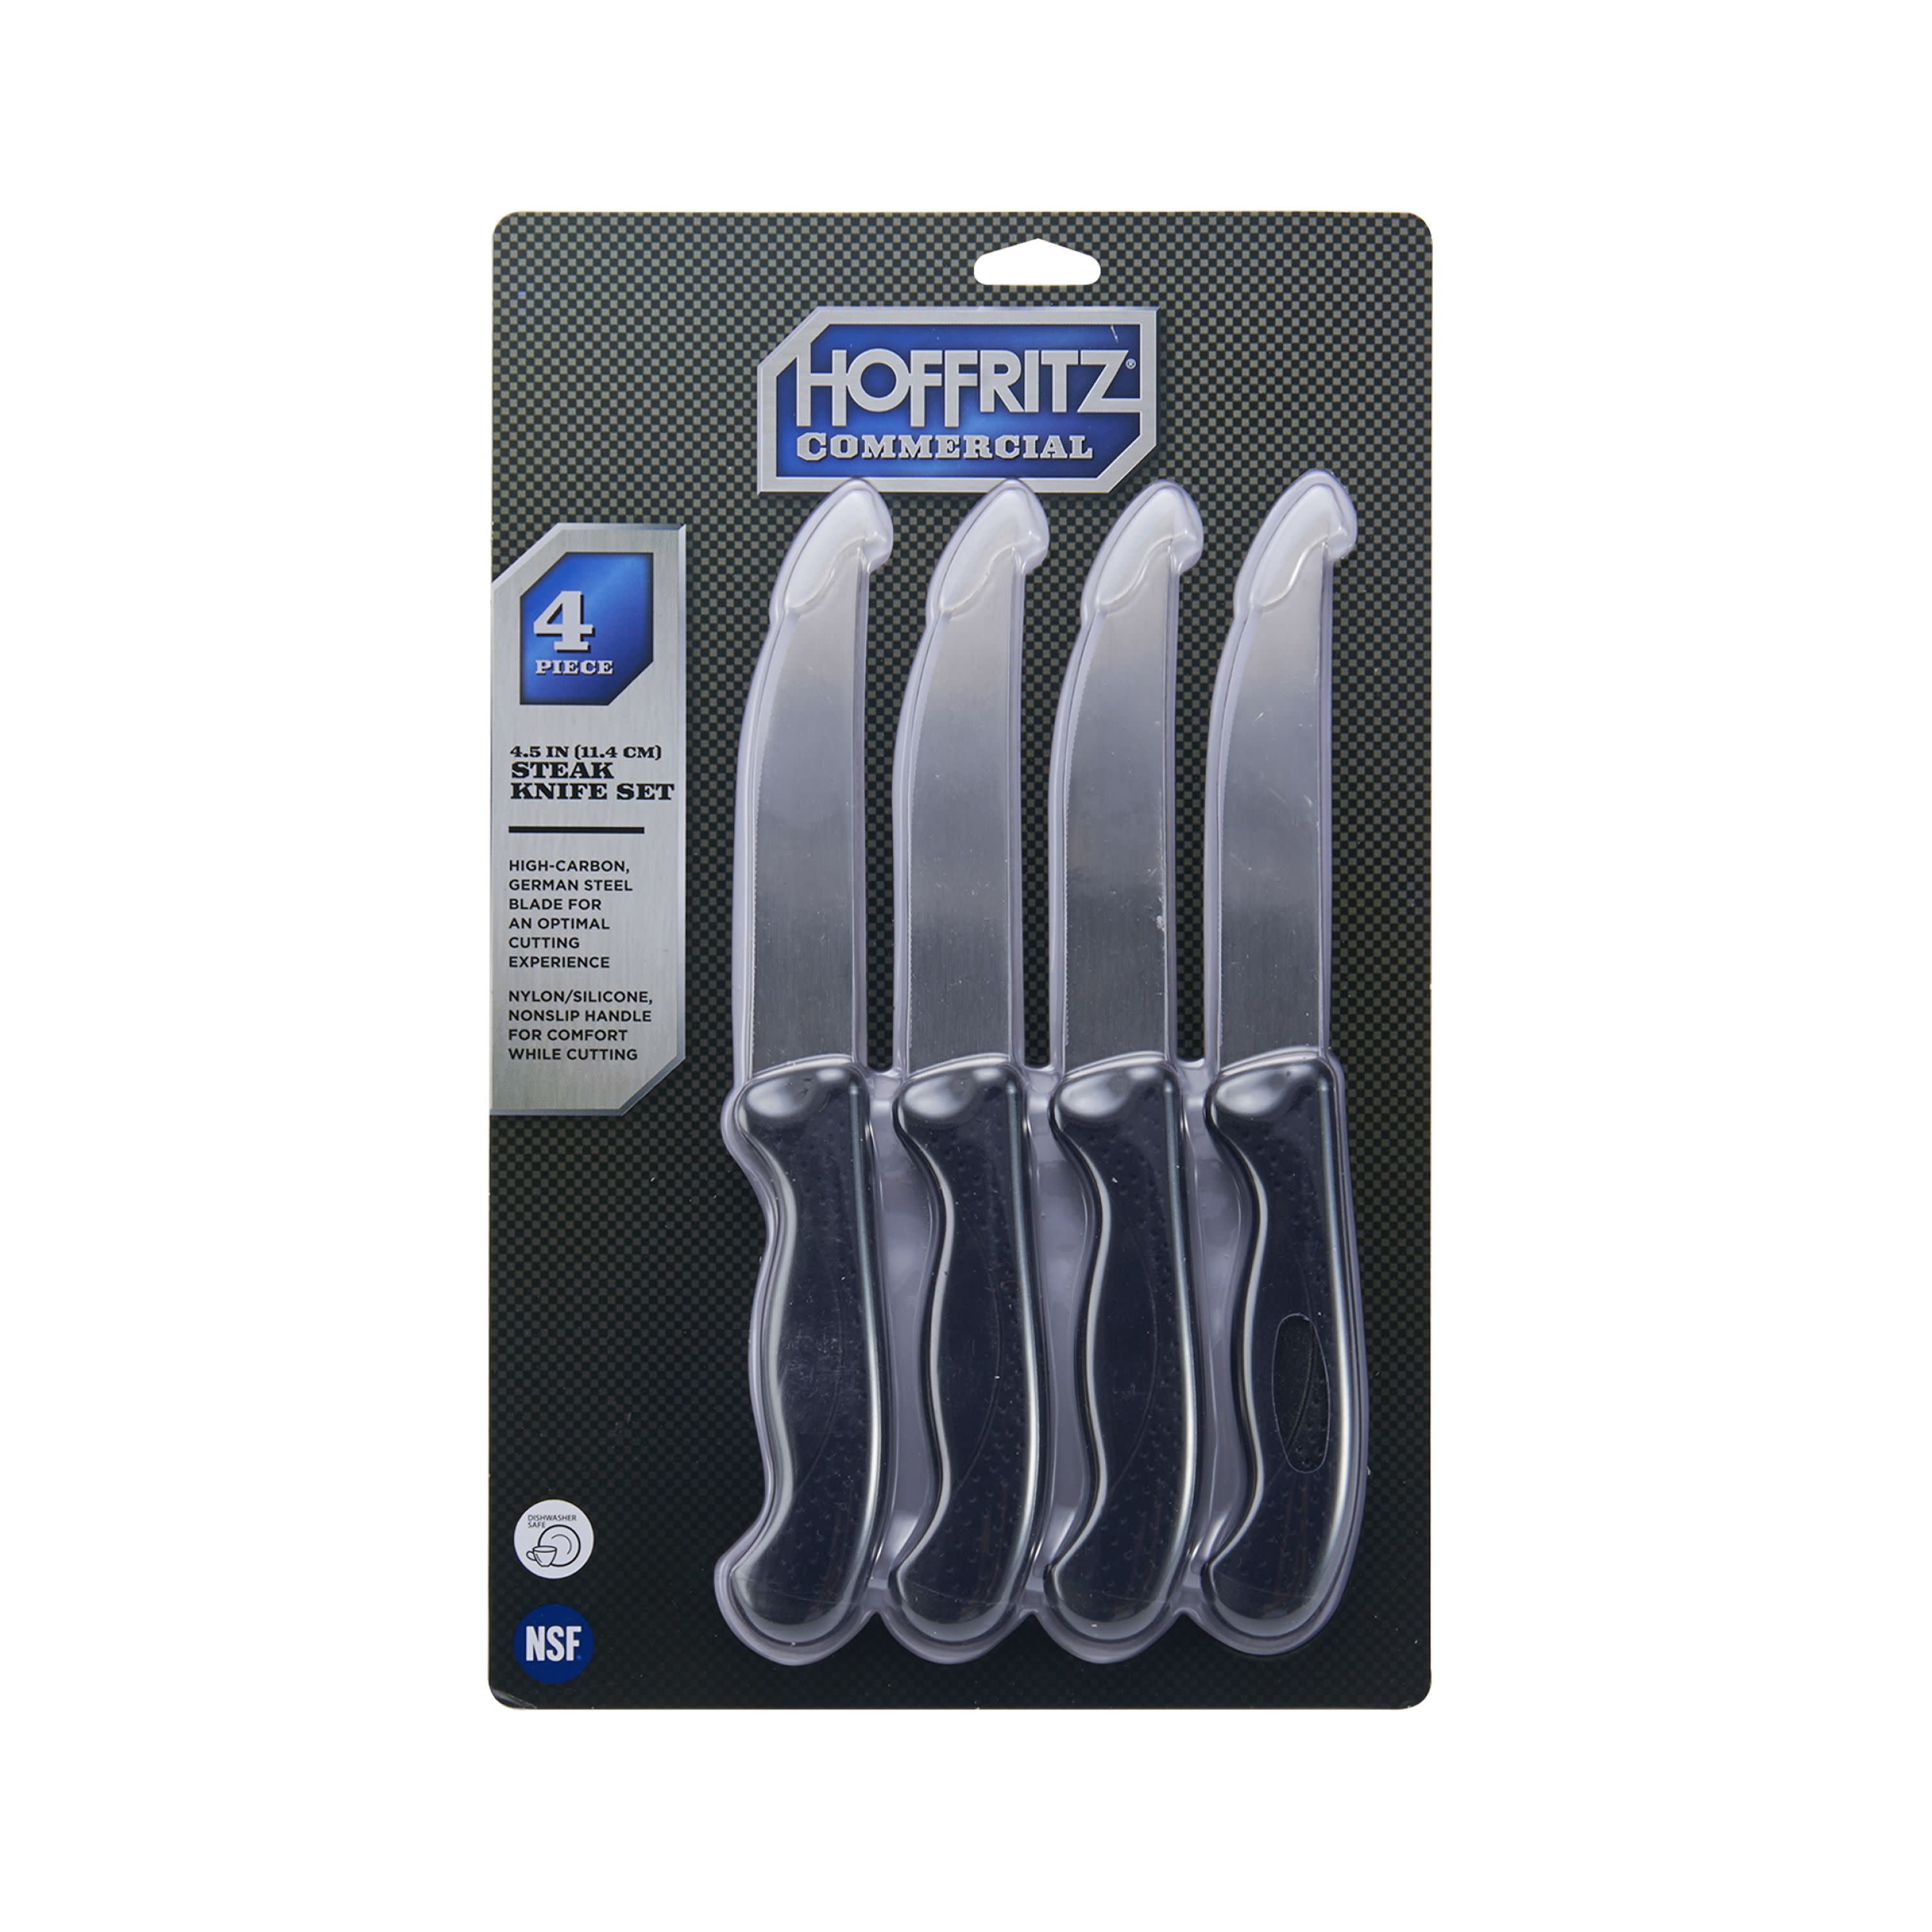 Flitz knife restauration kit, 4-piece  Advantageously shopping at